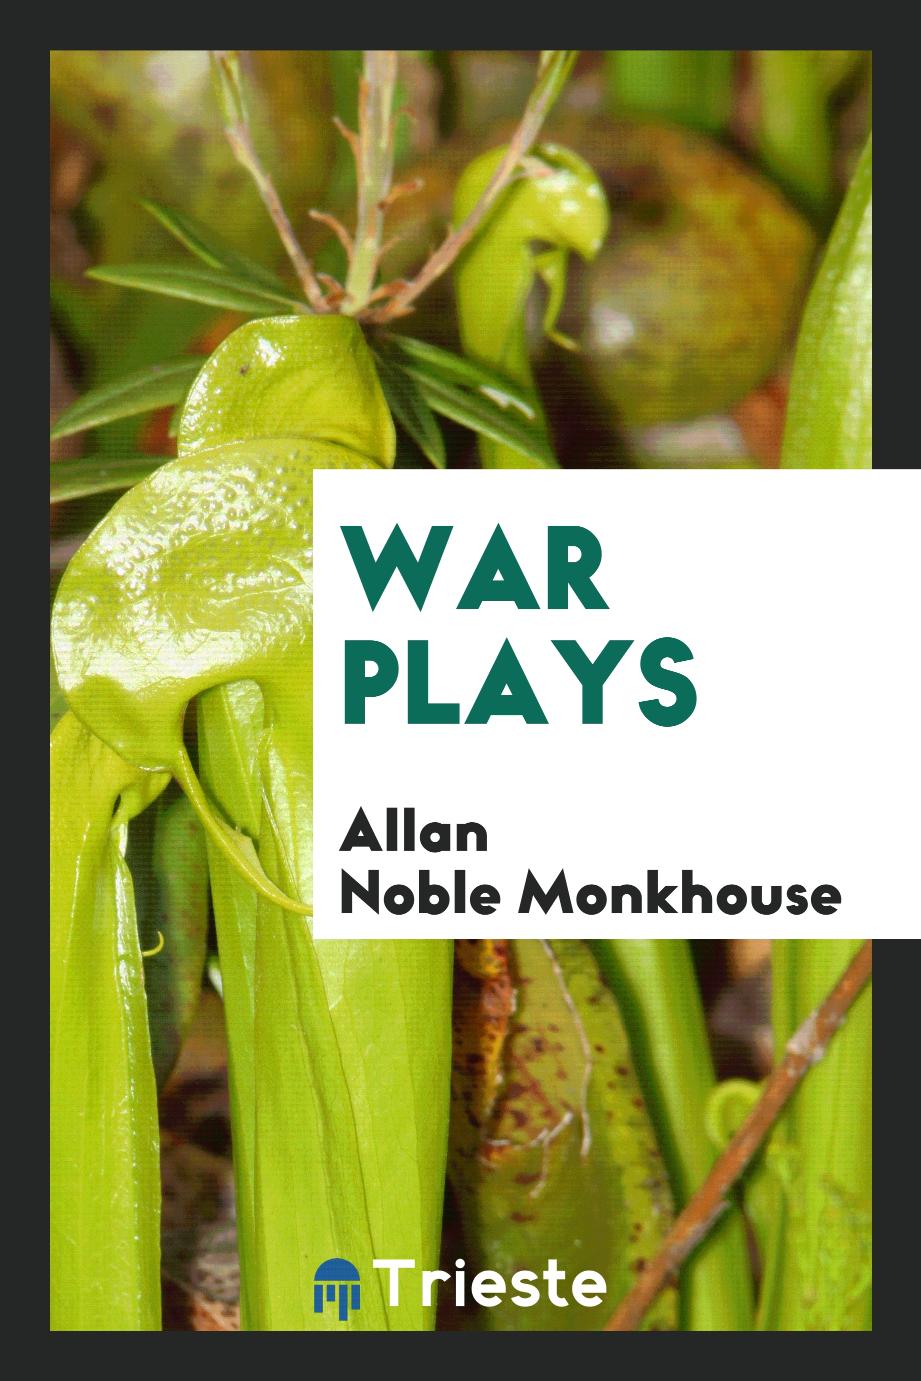 Allan Noble Monkhouse - War plays